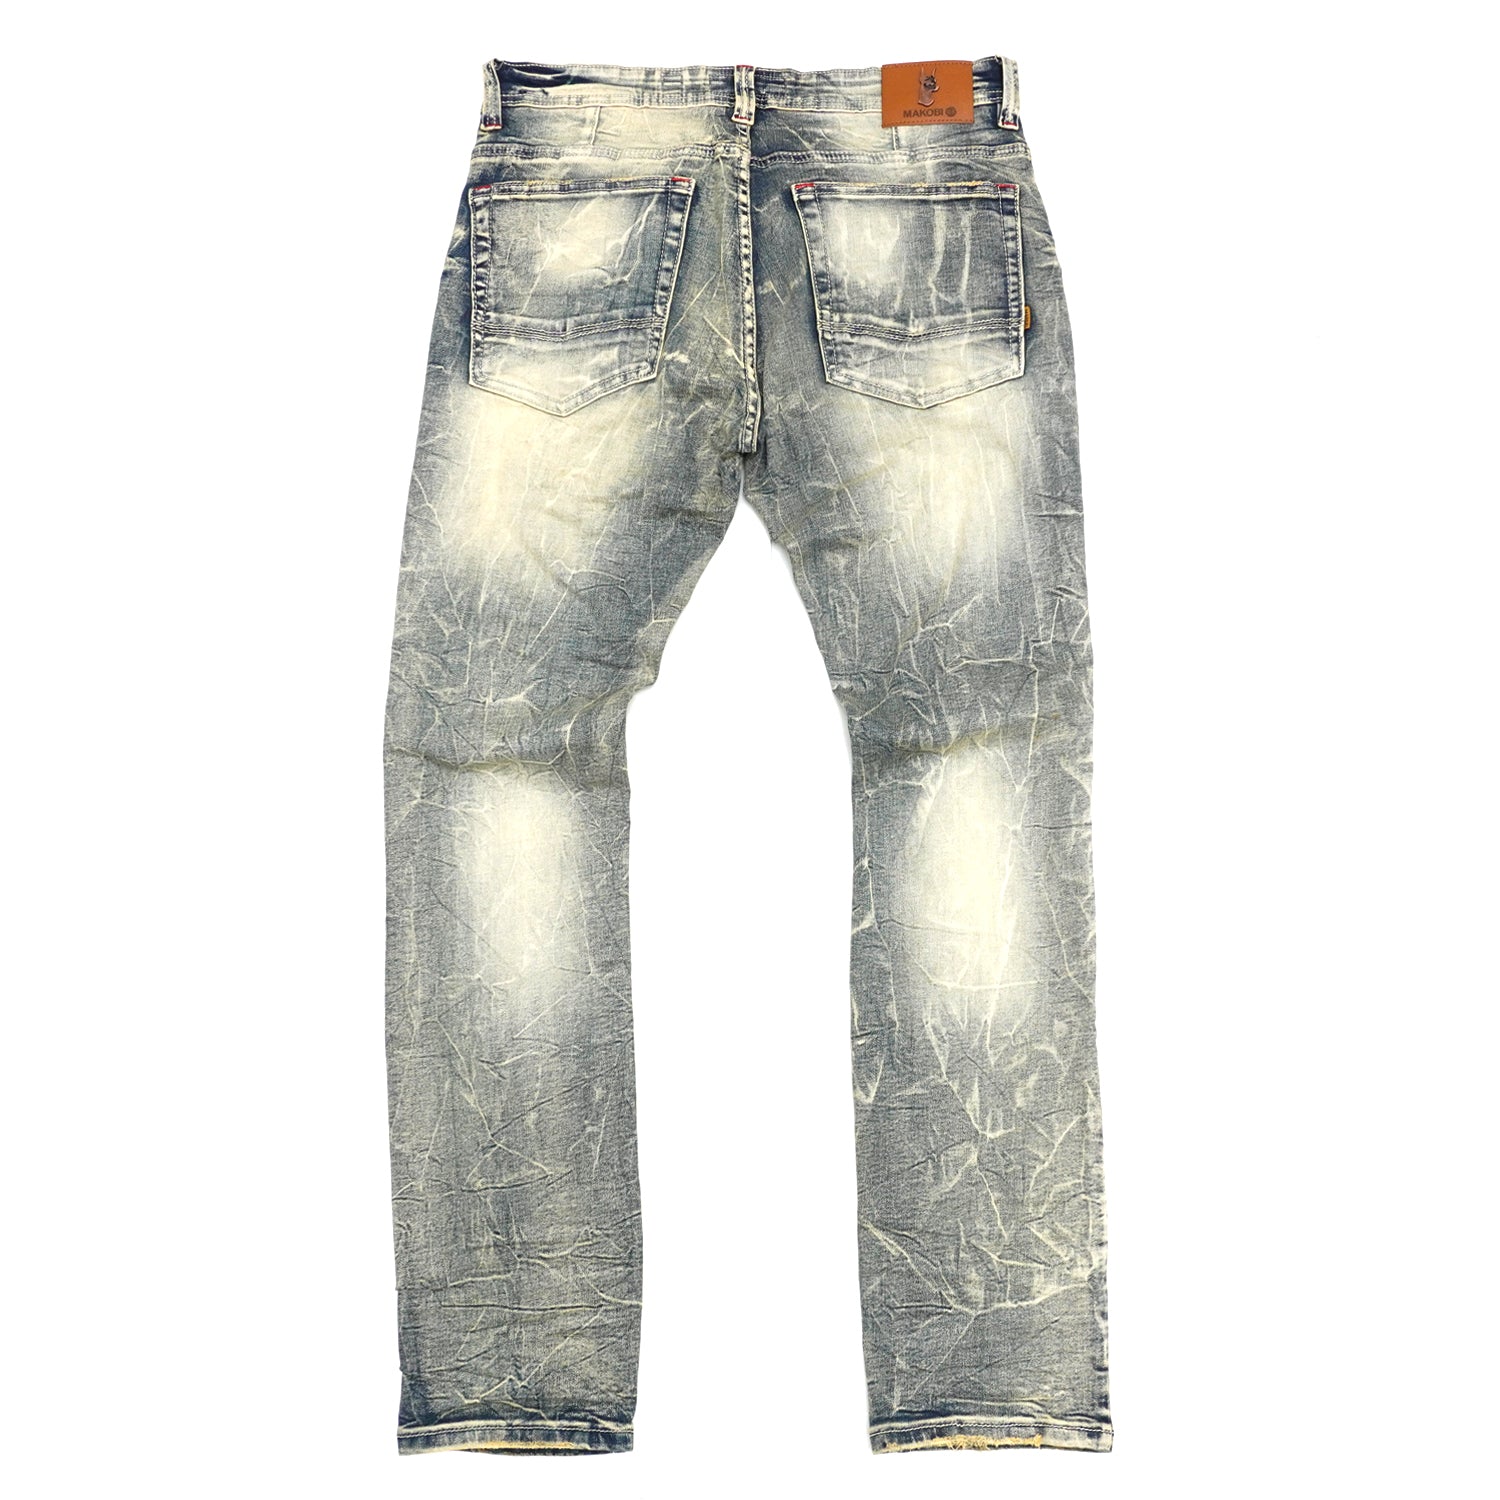 M1990 Leaders Denim Jeans - Dirt – Makobi Jeans USA